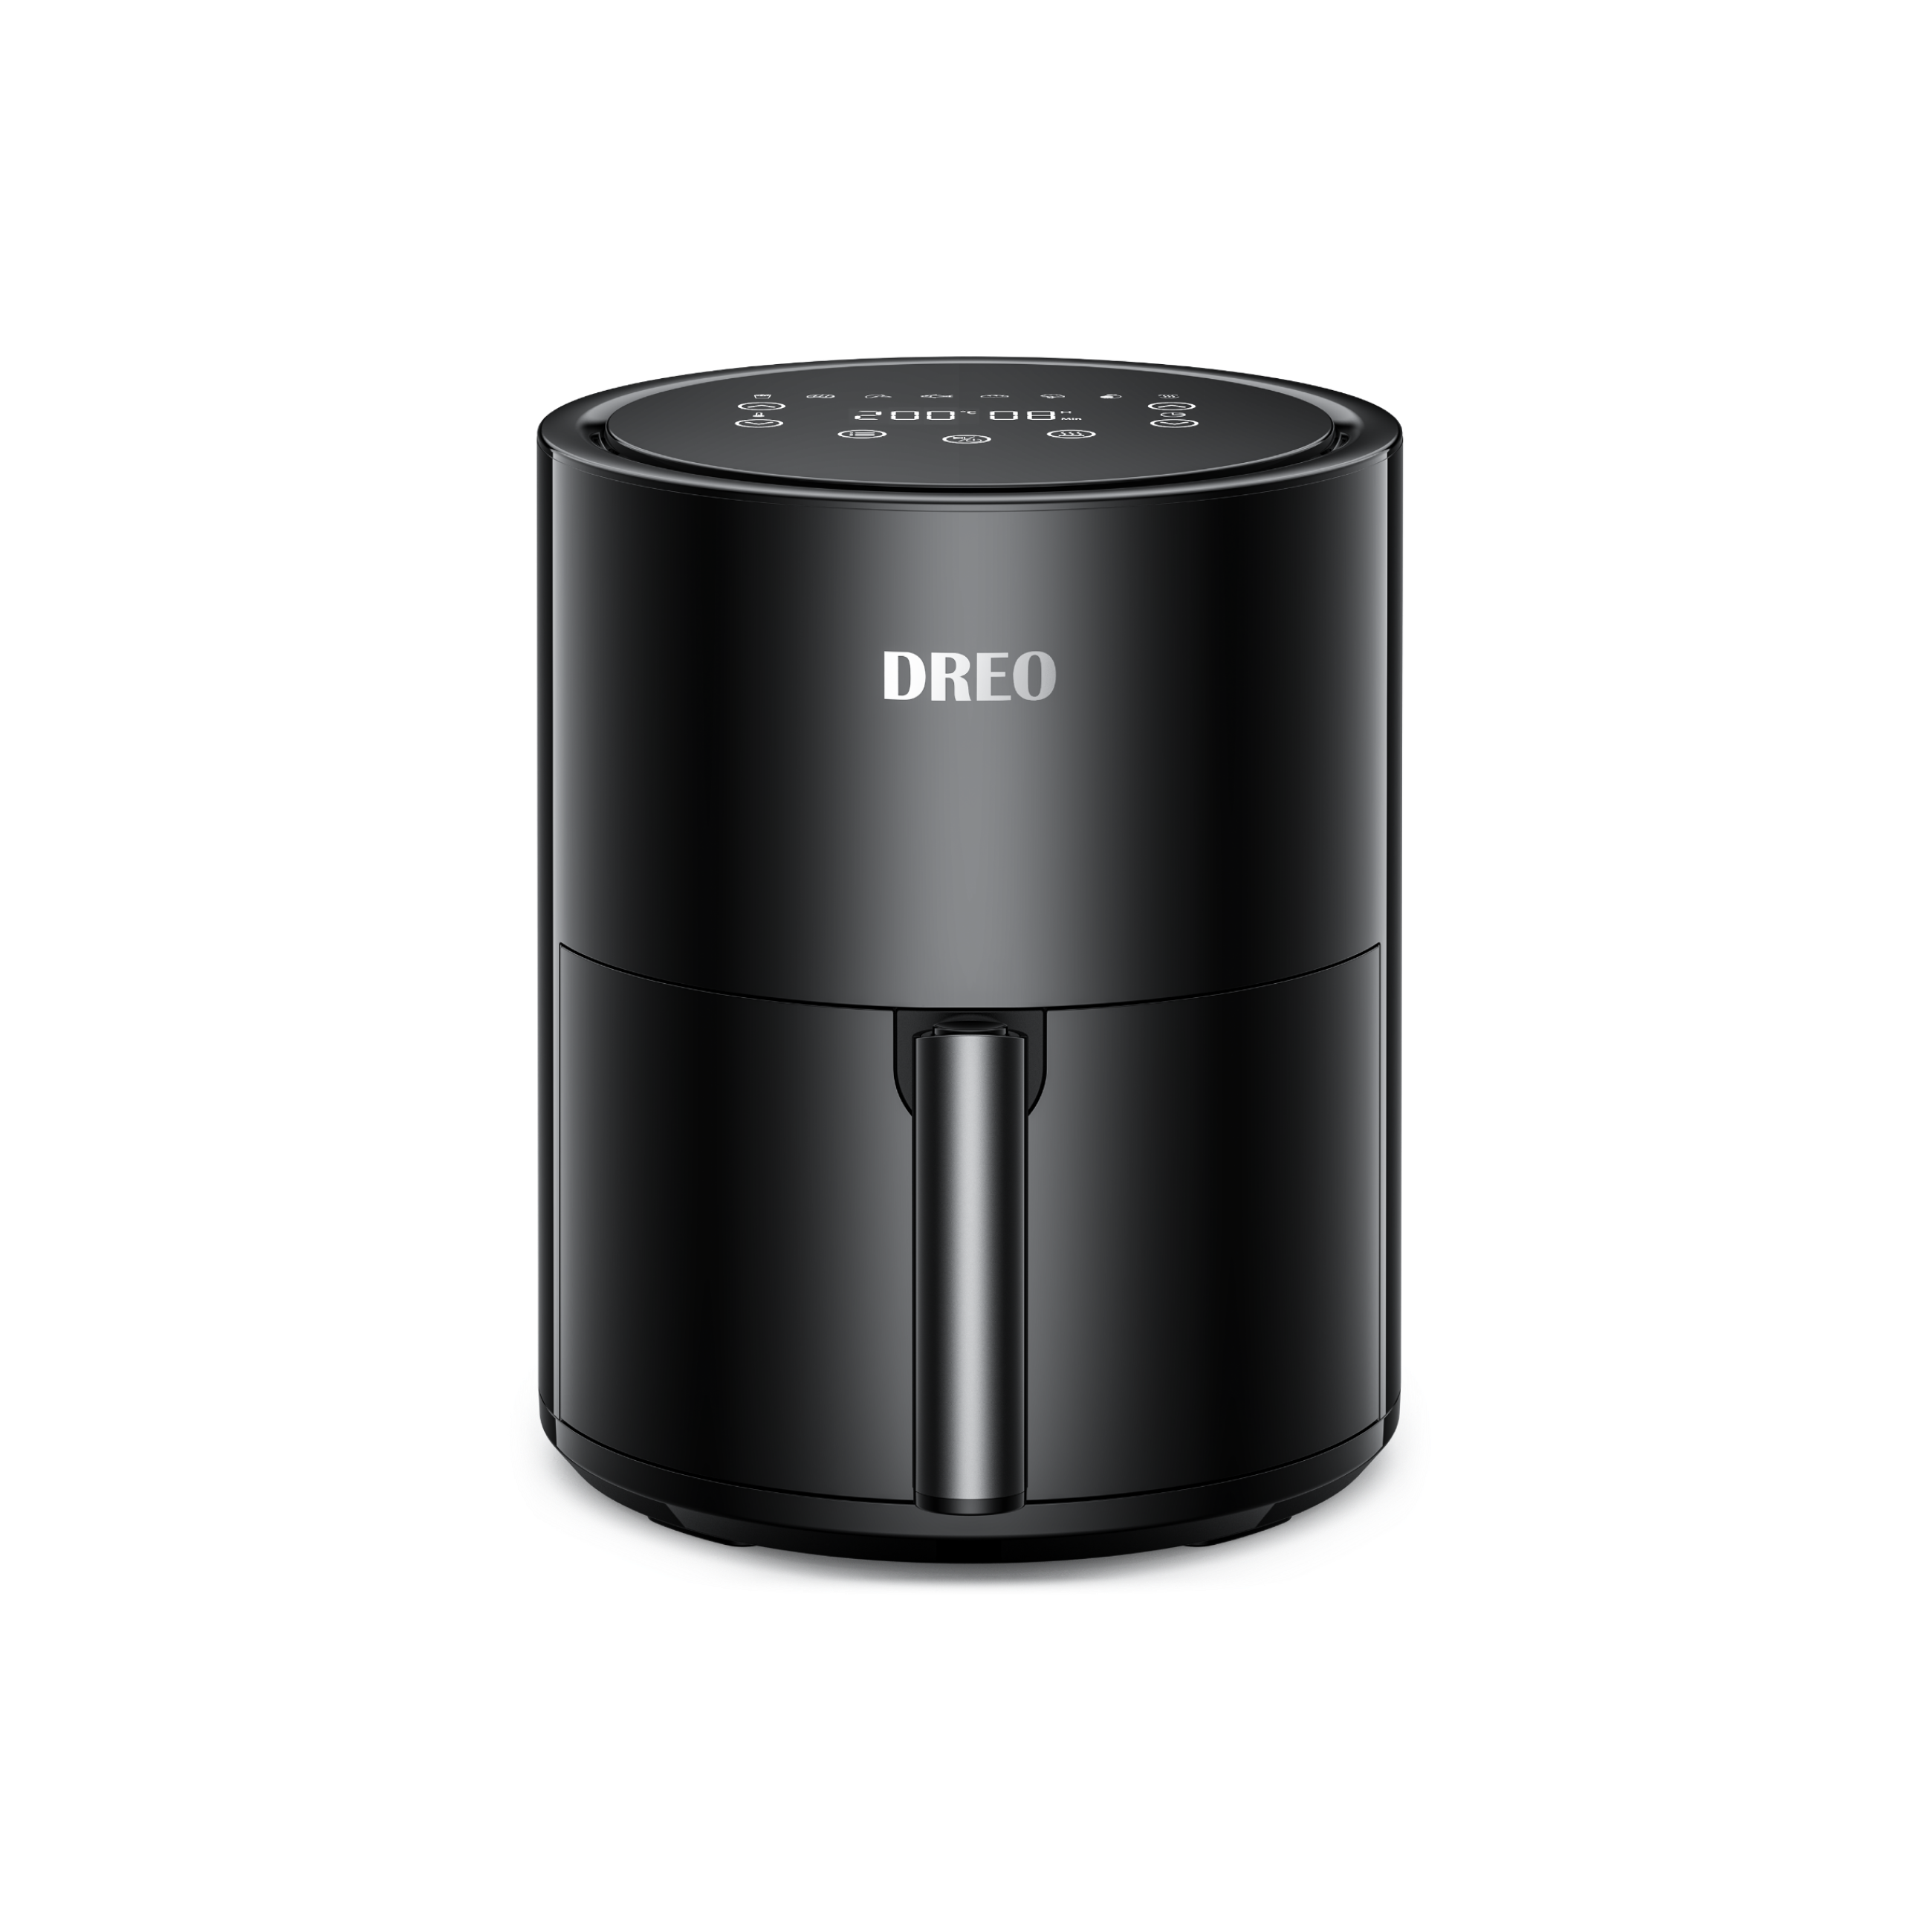 Dreo Fully Functional Aircrisp Pro 4 Quart Air Fryer